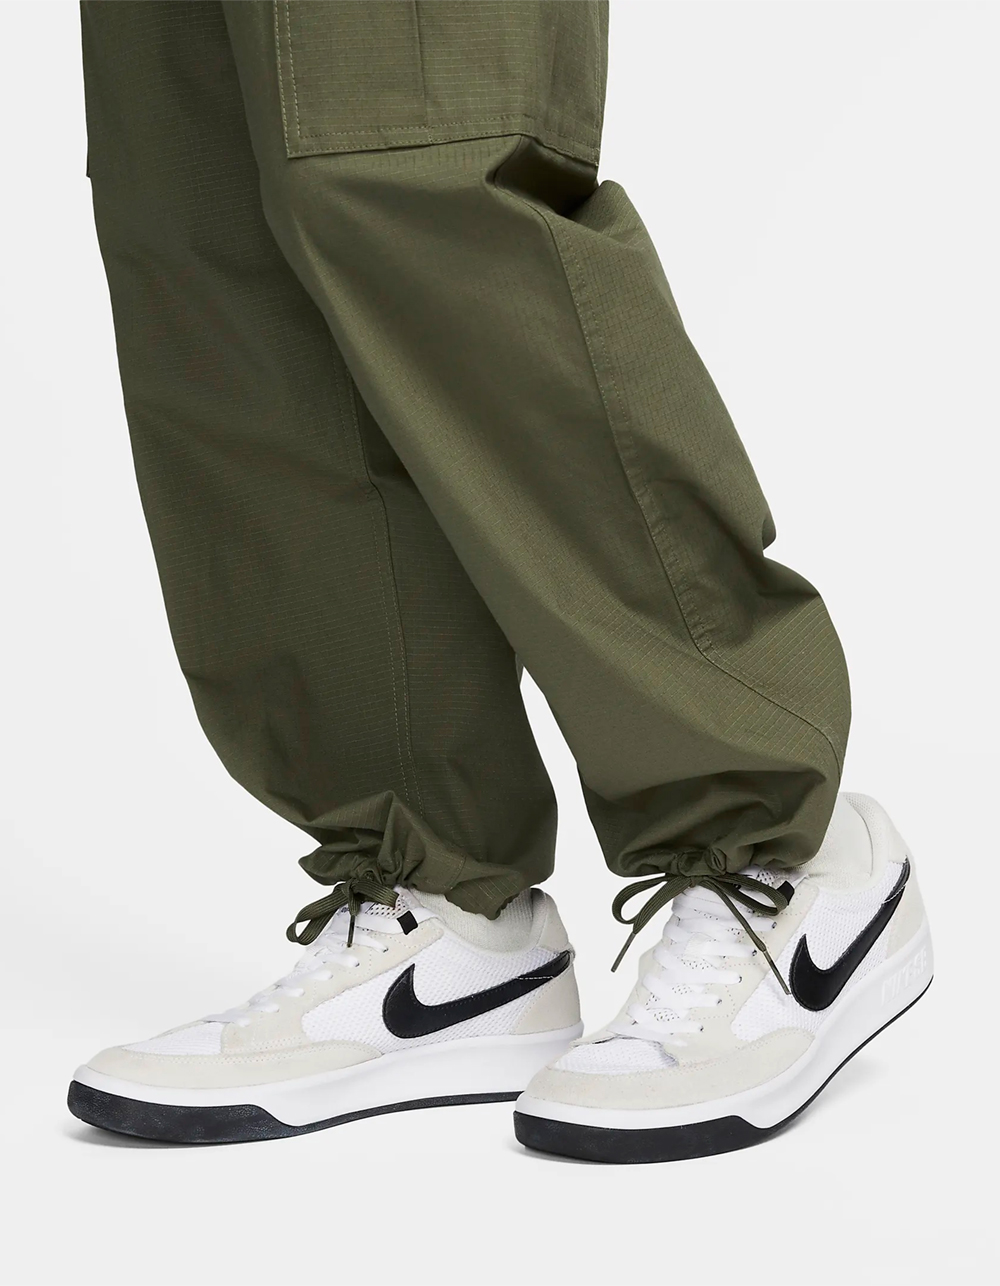 Nike SB Kearny Skate Cargo Pants : : Clothing, Shoes & Accessories